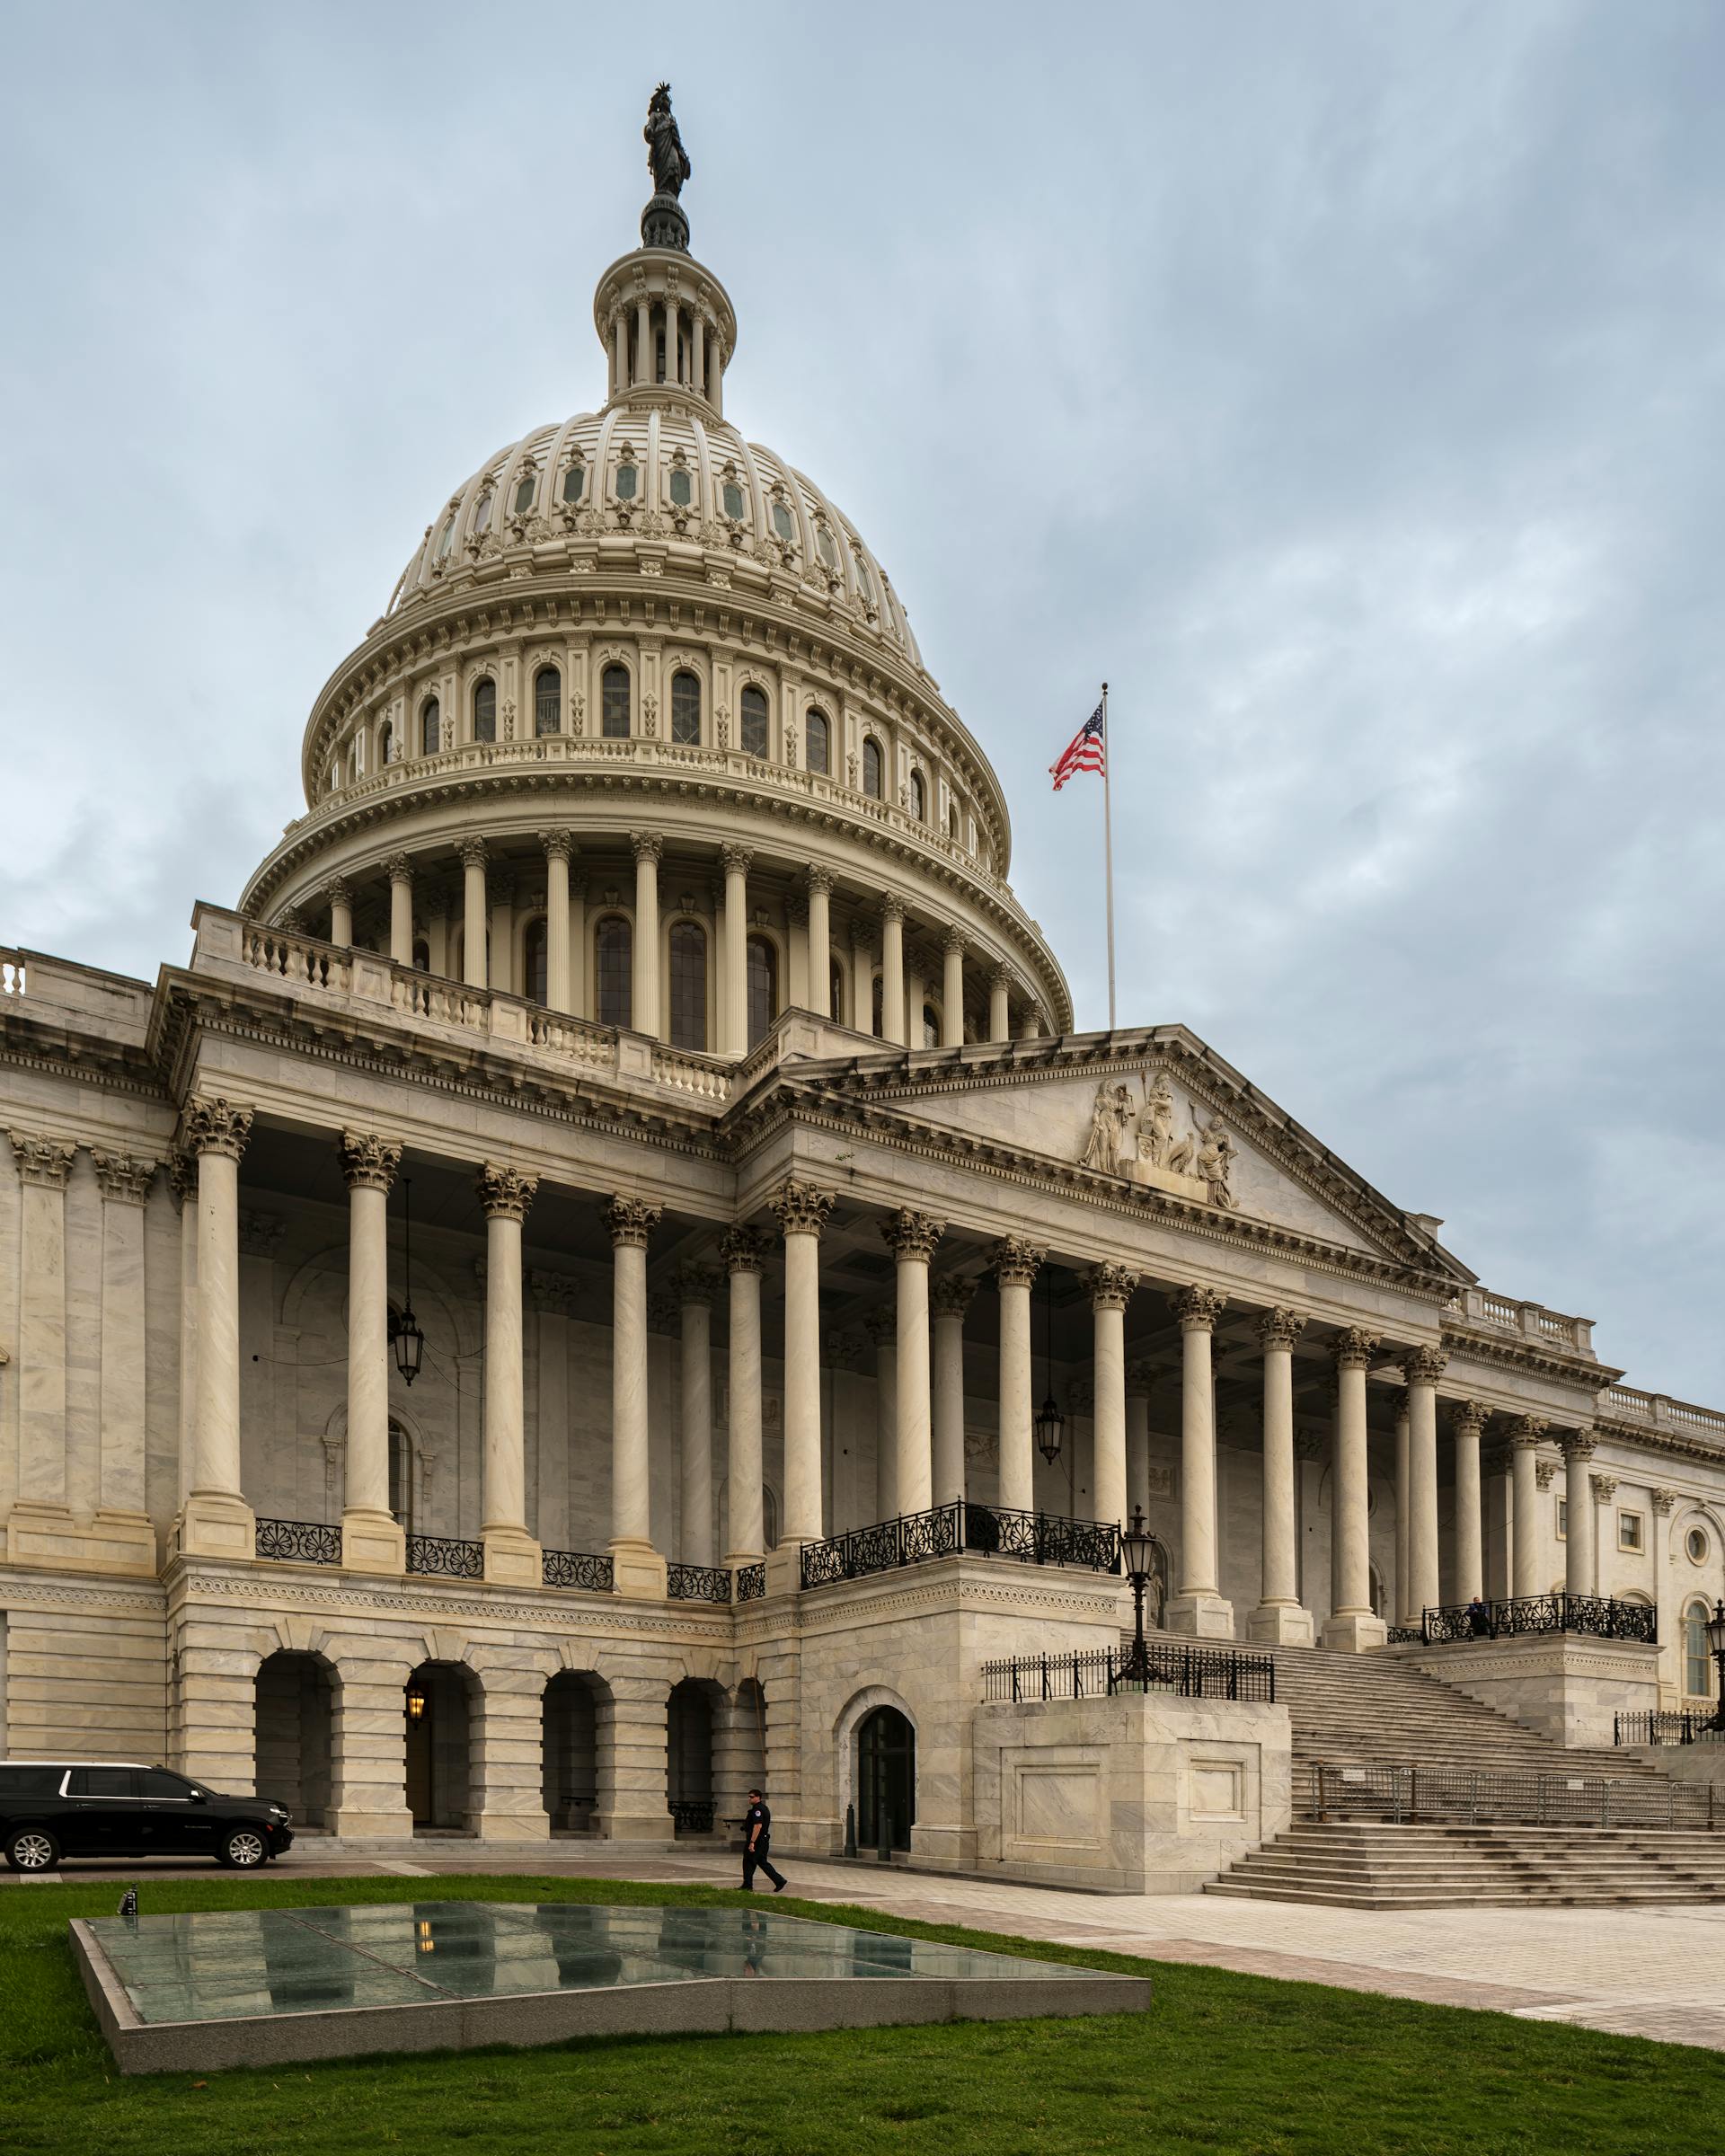 U.S. Congress, photographed by Trev Adams